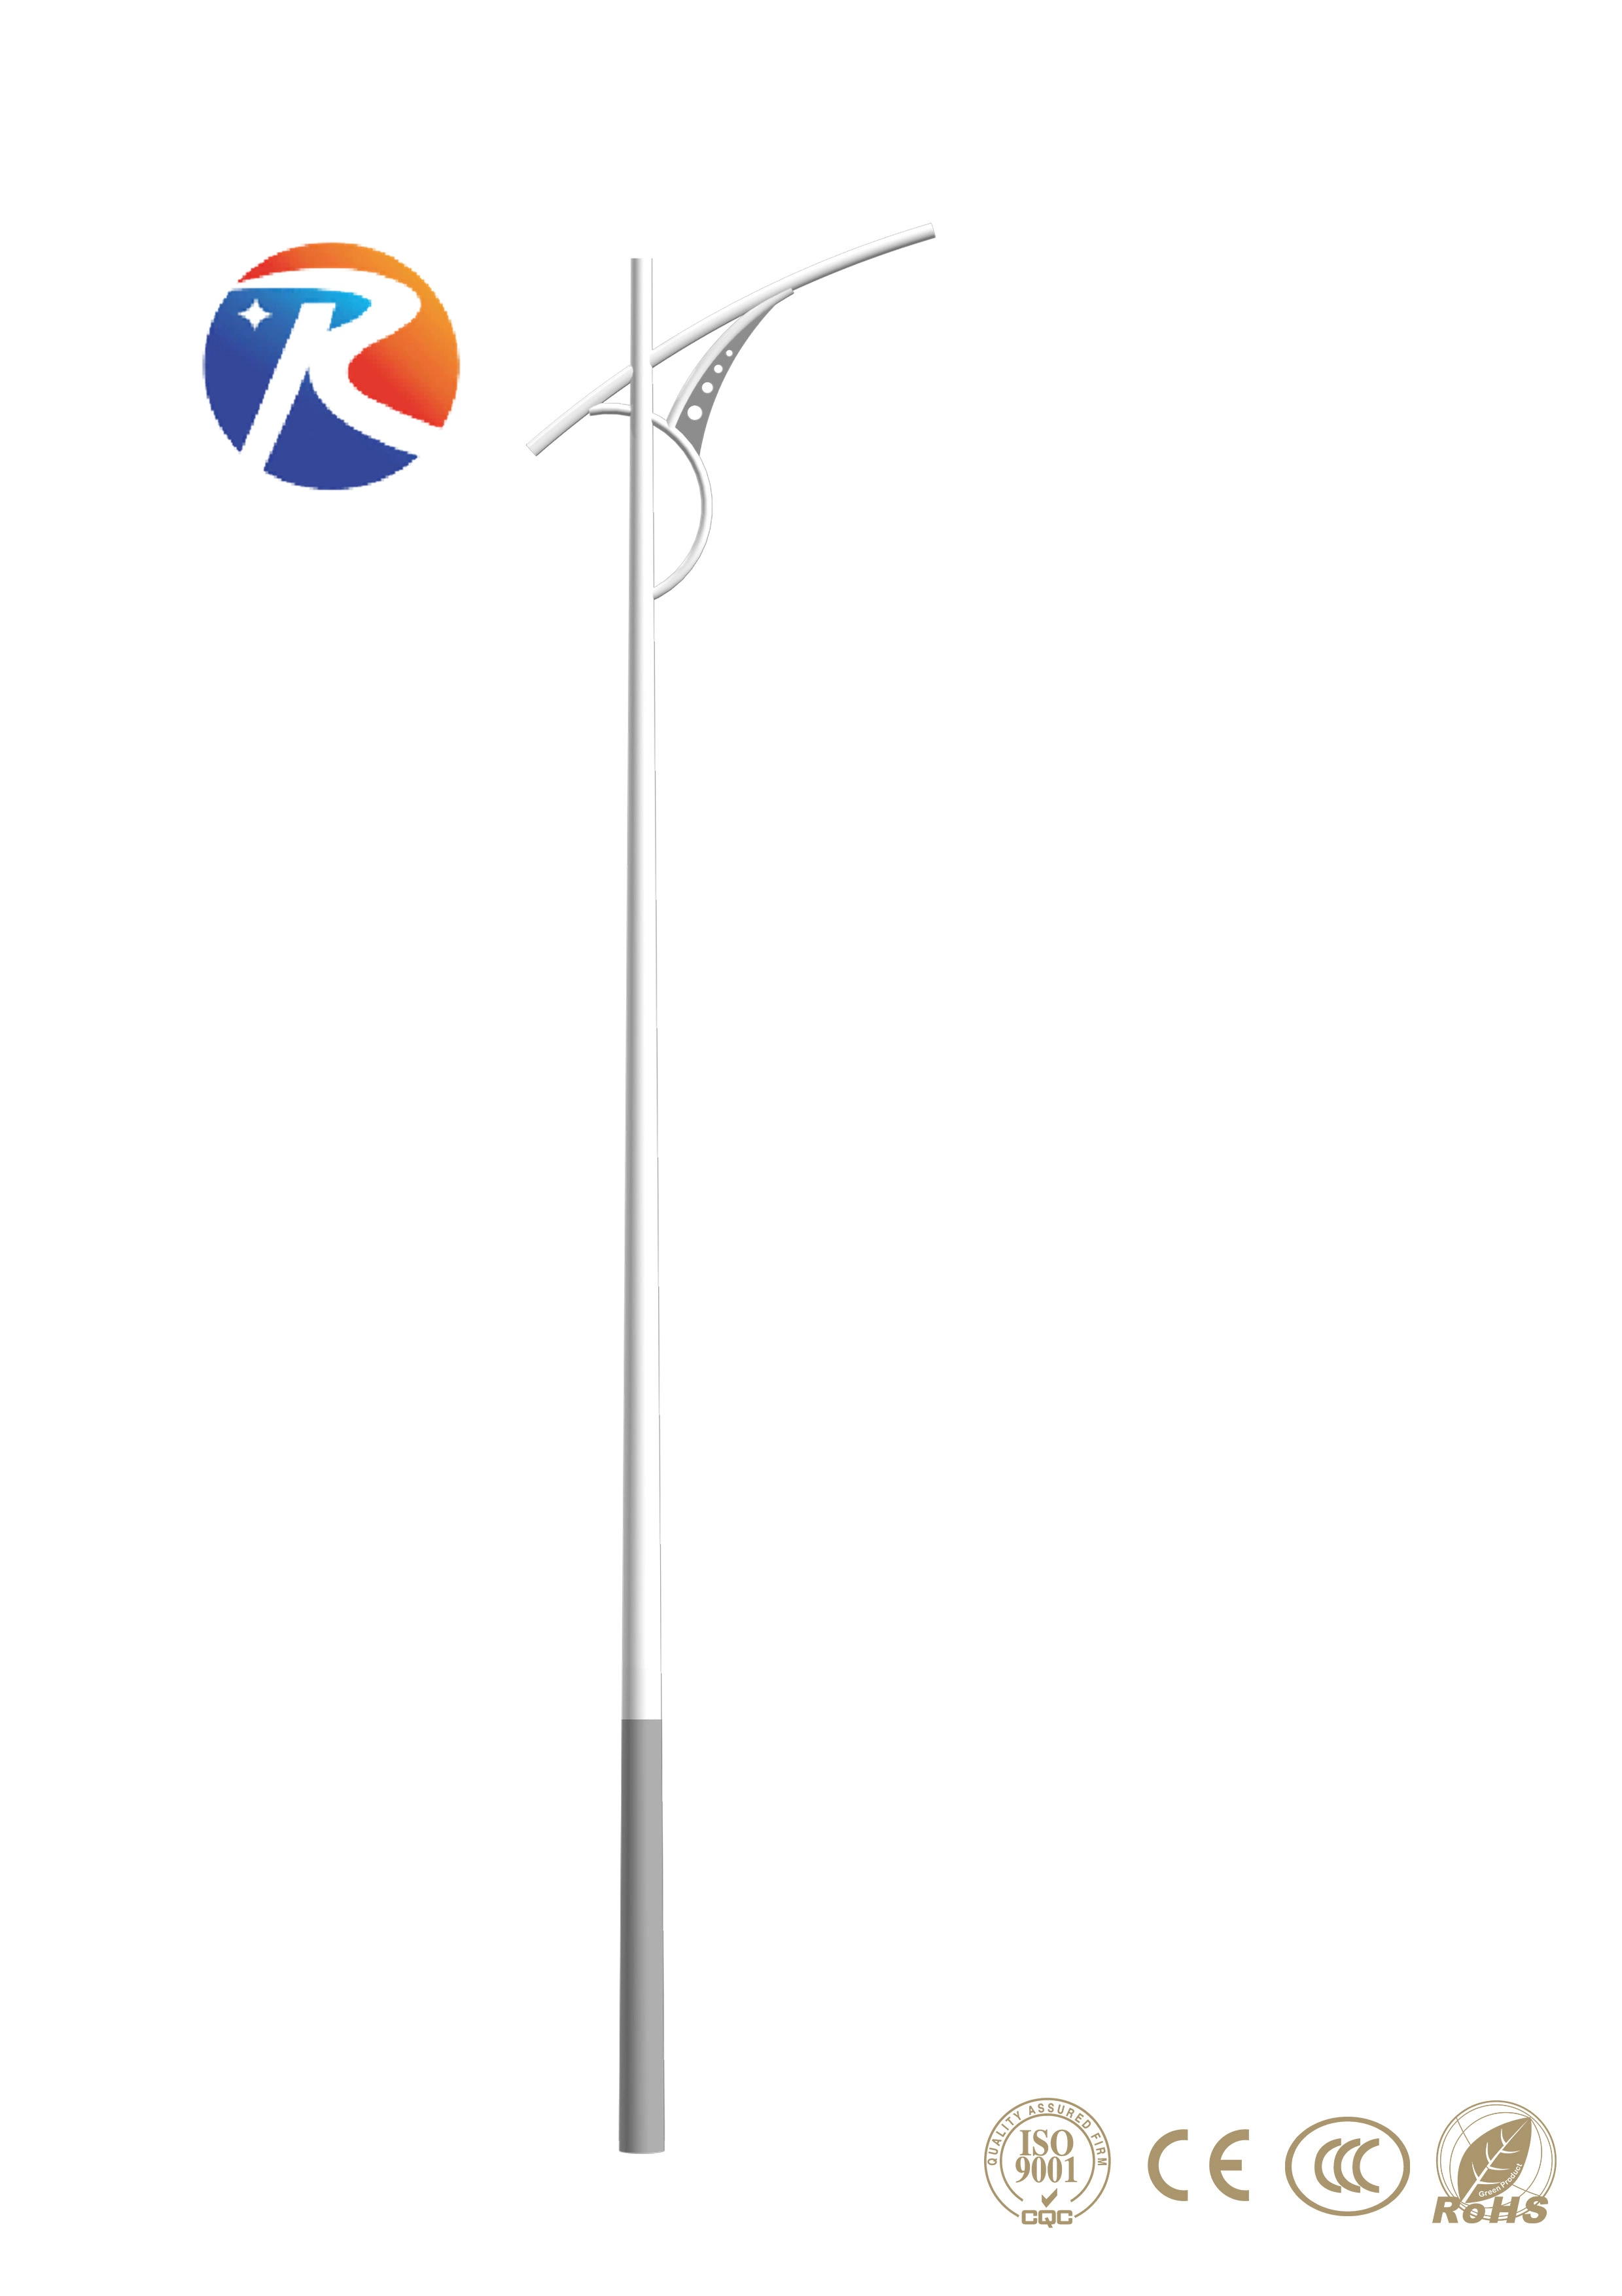 Galvanized Solar LED Garden Light Pole Lamp Post Lamp Pole Street Light Pole